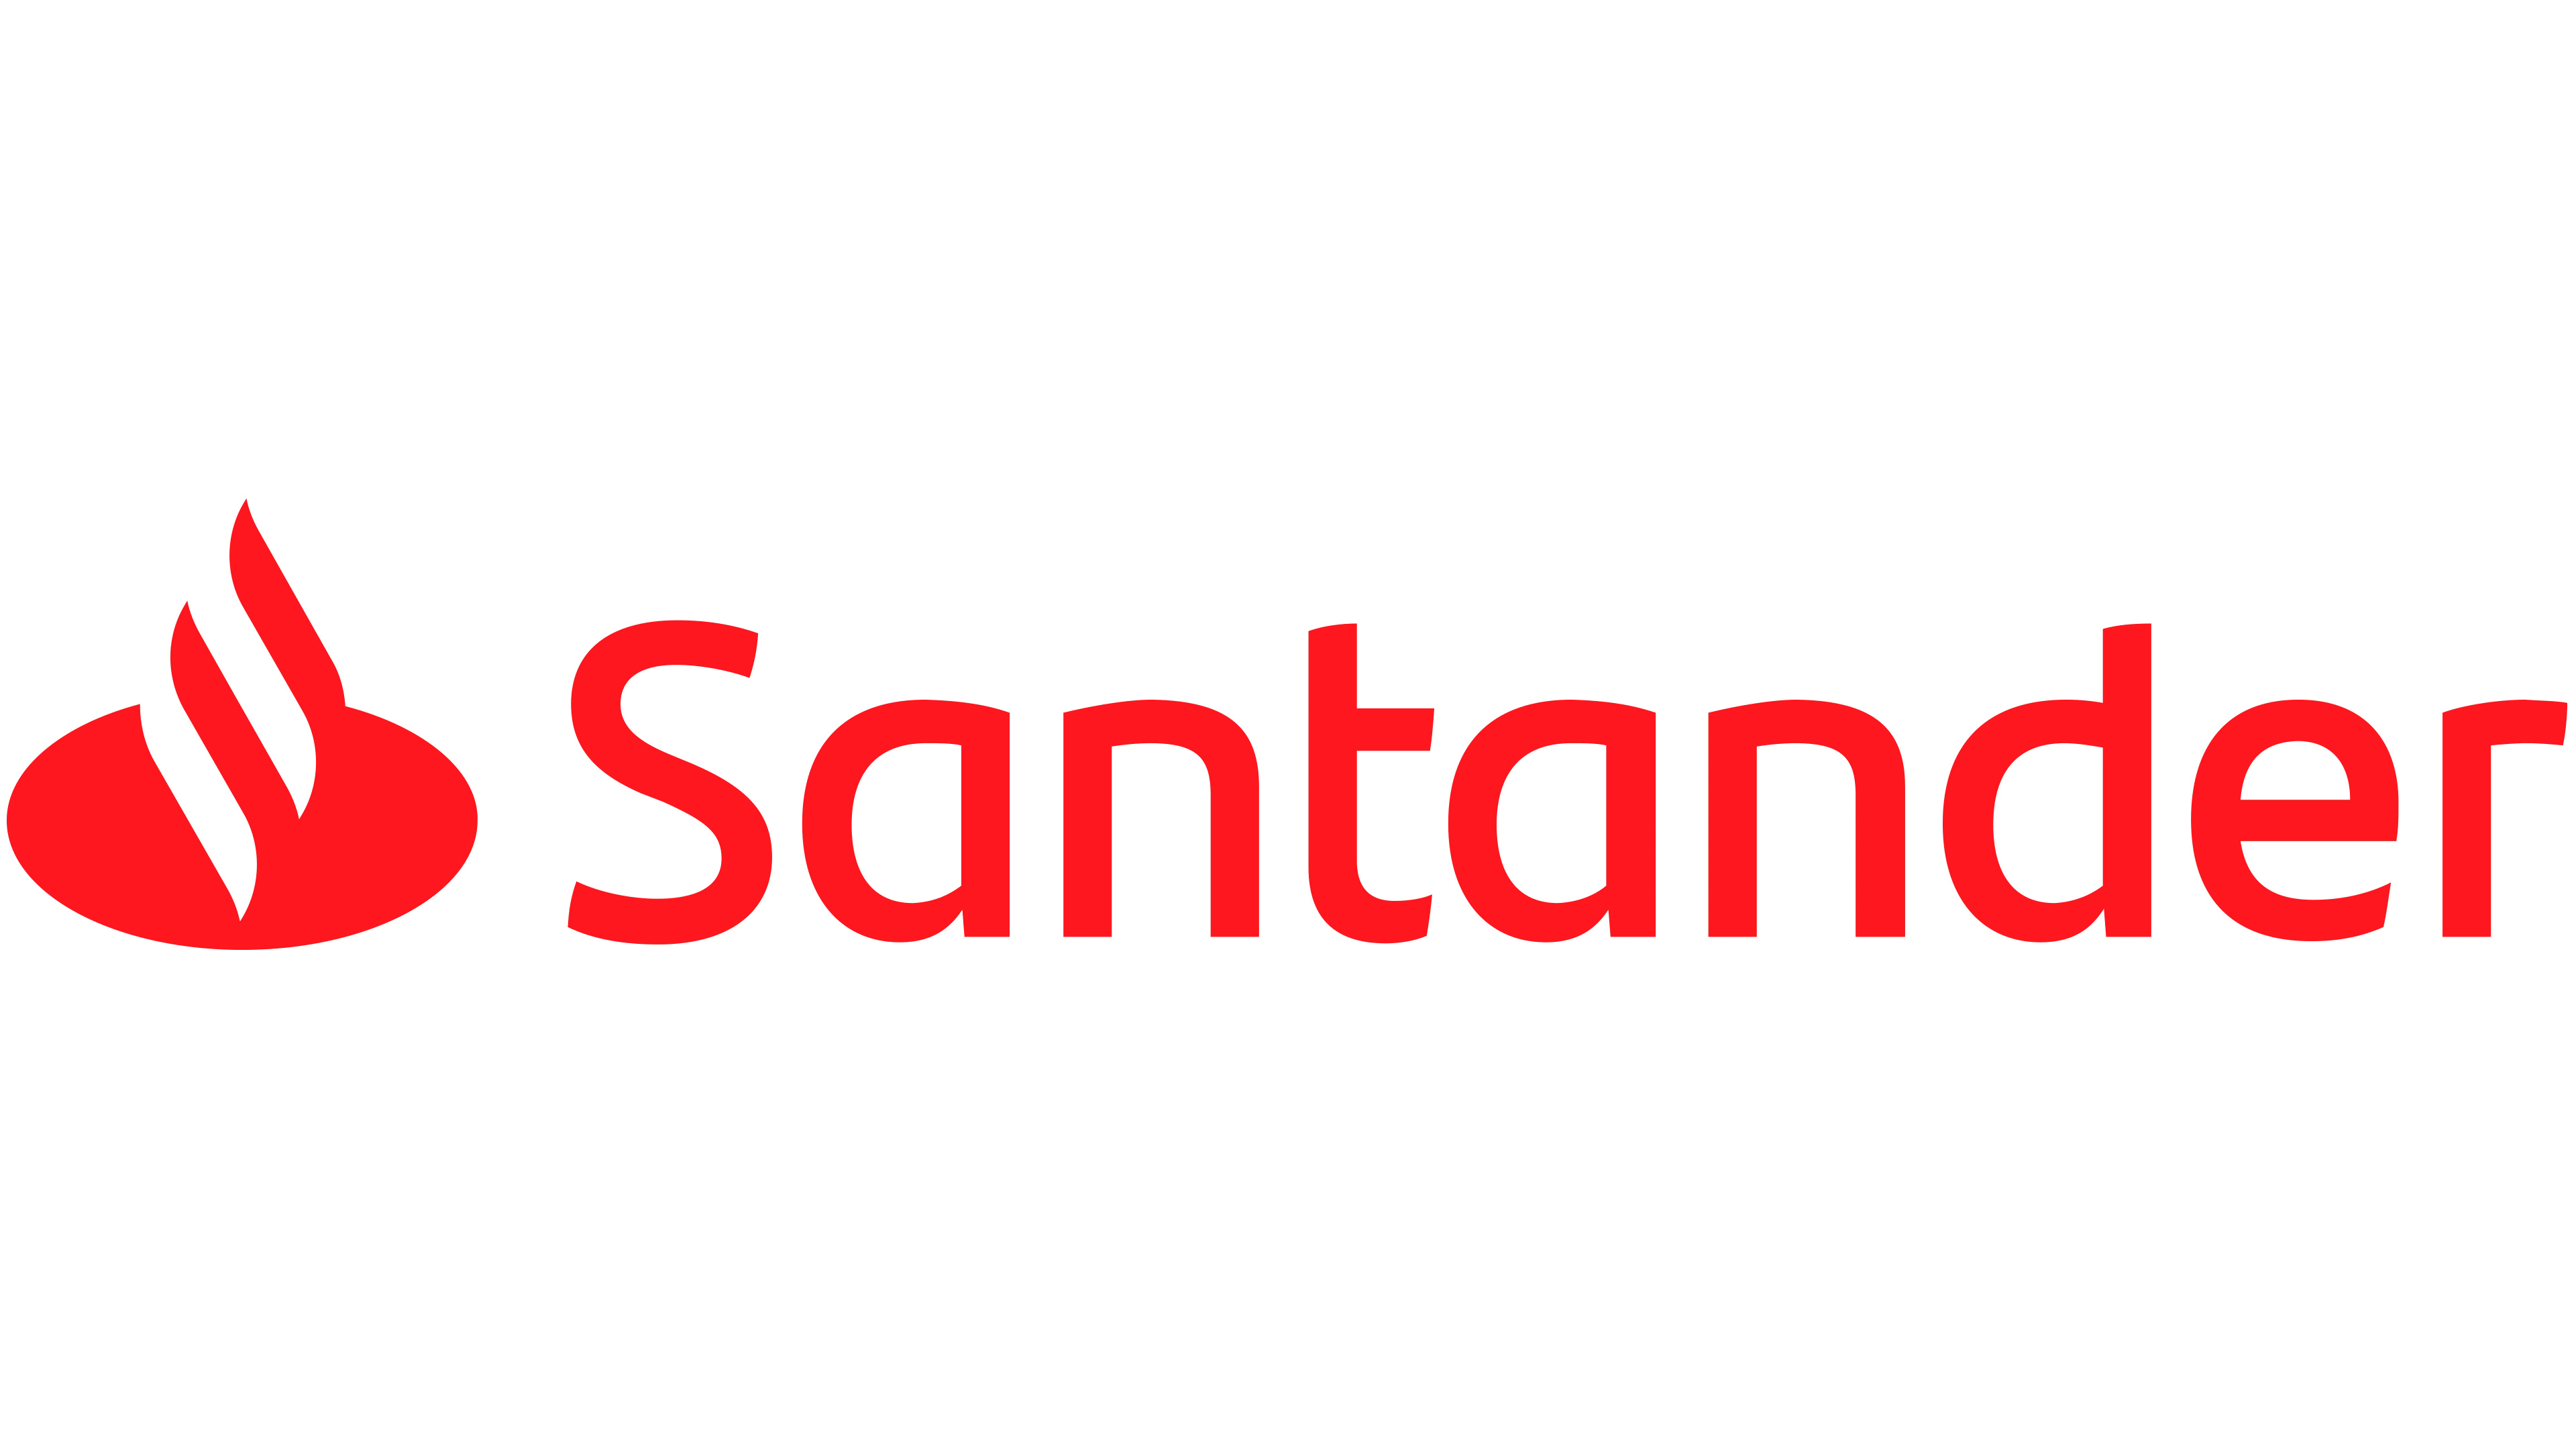 simule taxas do Banco Santander com a Konsi